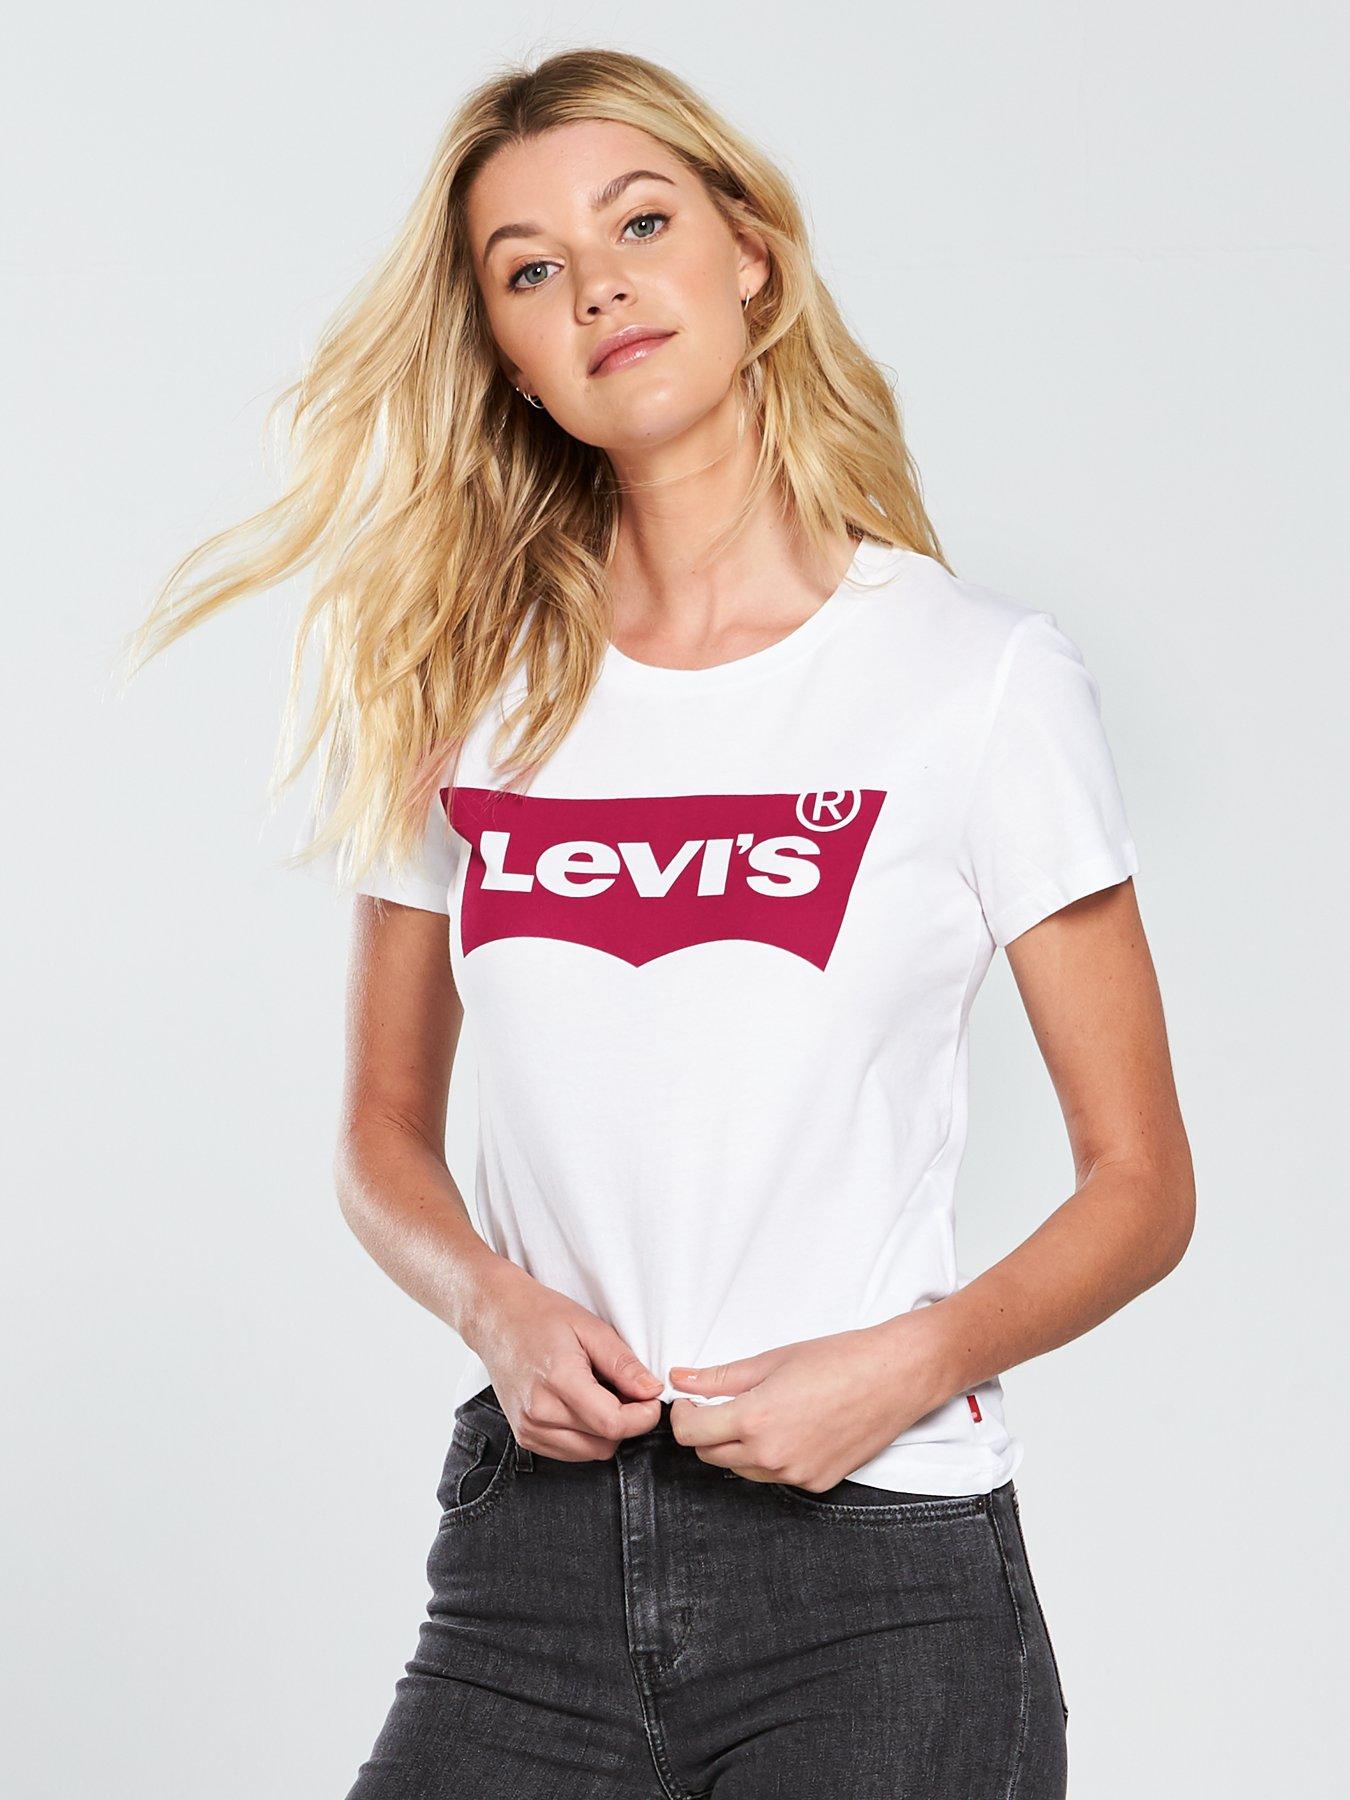 levi's t shirts women's